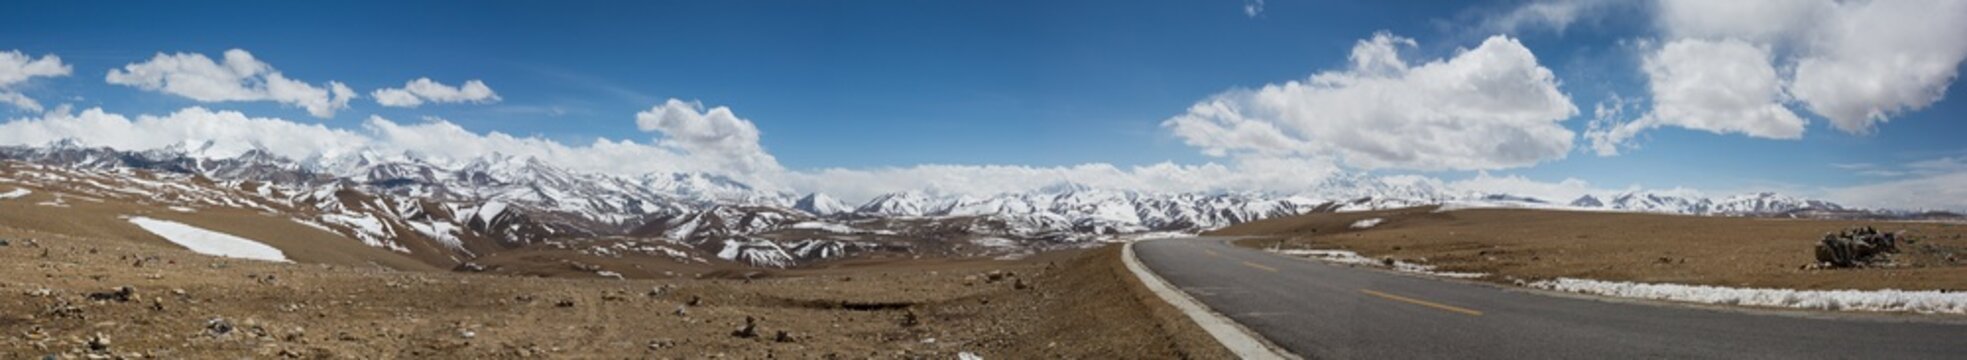 Road of Friendship in Tibet - Going to Kathmandu